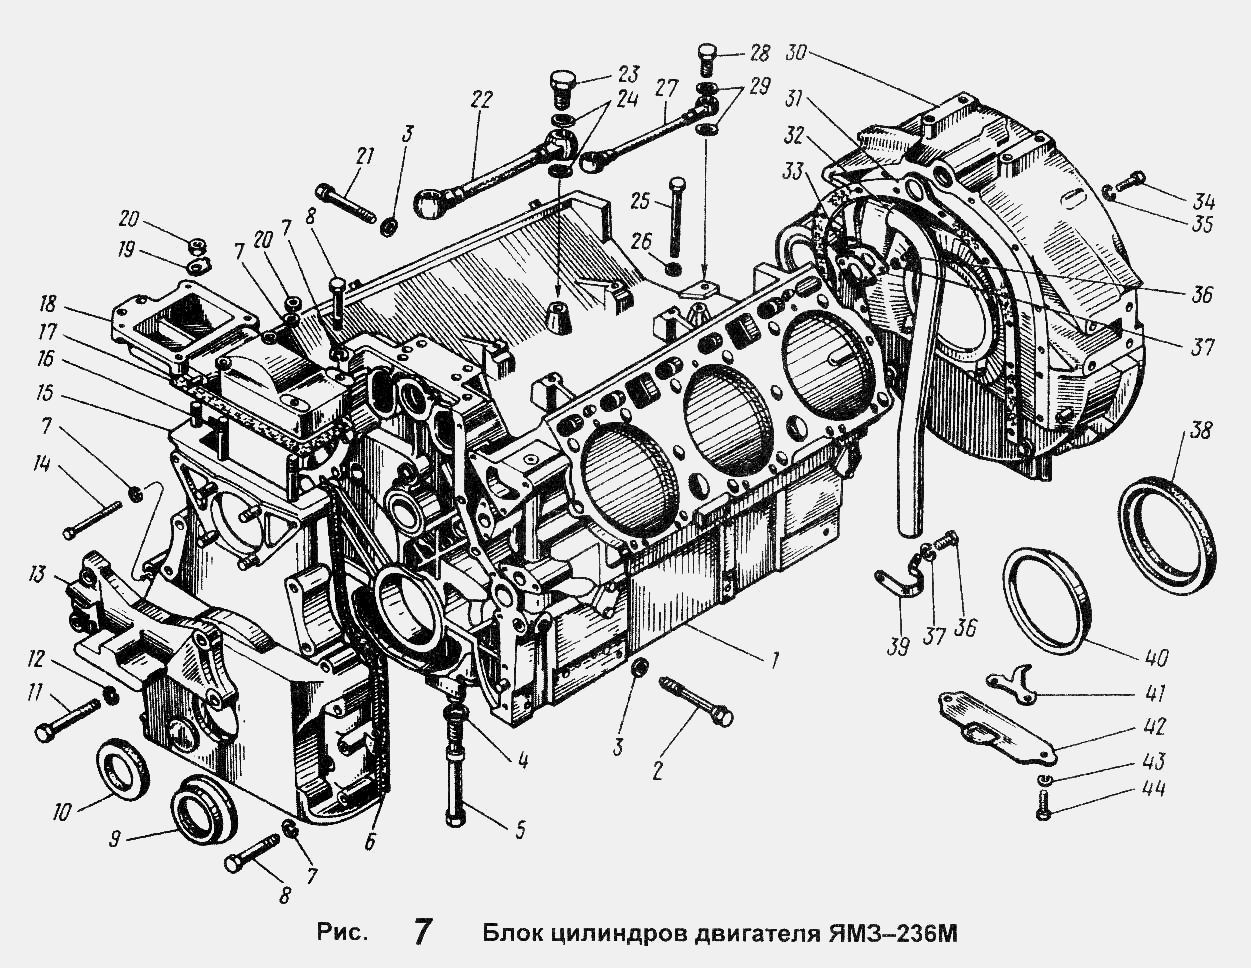 Блок цилиндров двигателя ЯМЗ-236М ЯМЗ  -  общий  каталог